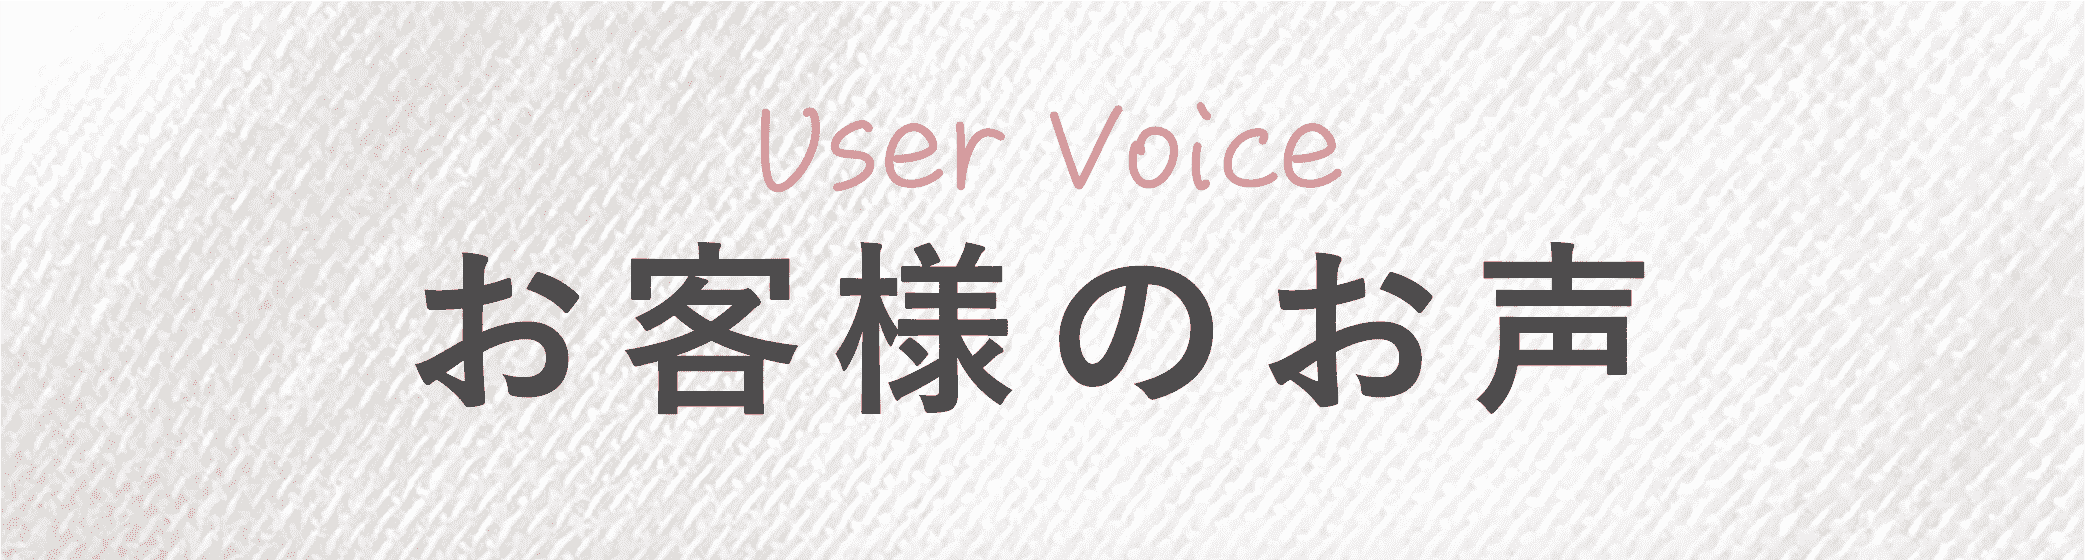 User Voice お客様のお声